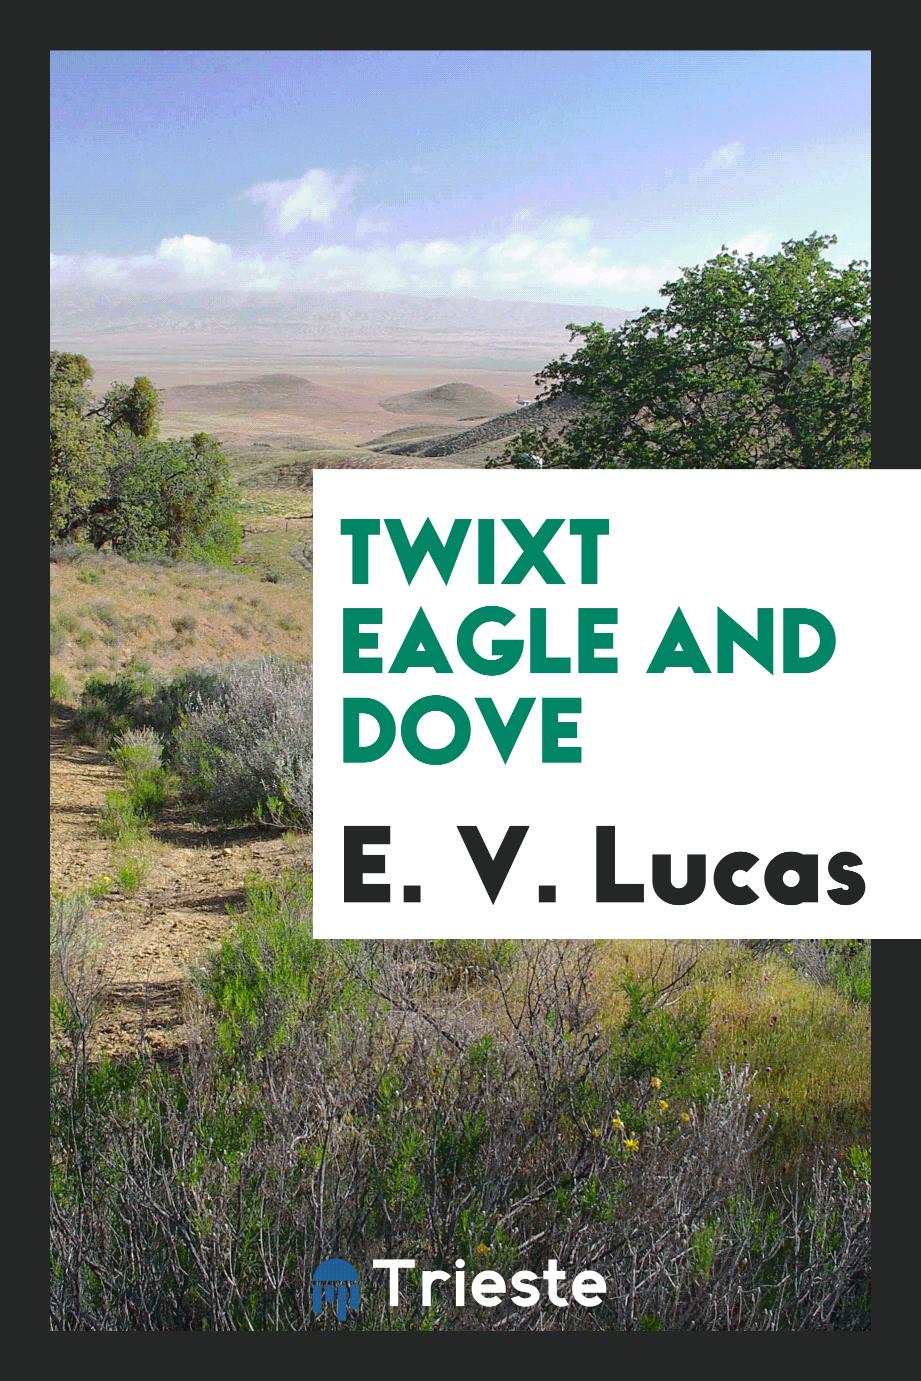 Twixt eagle and dove